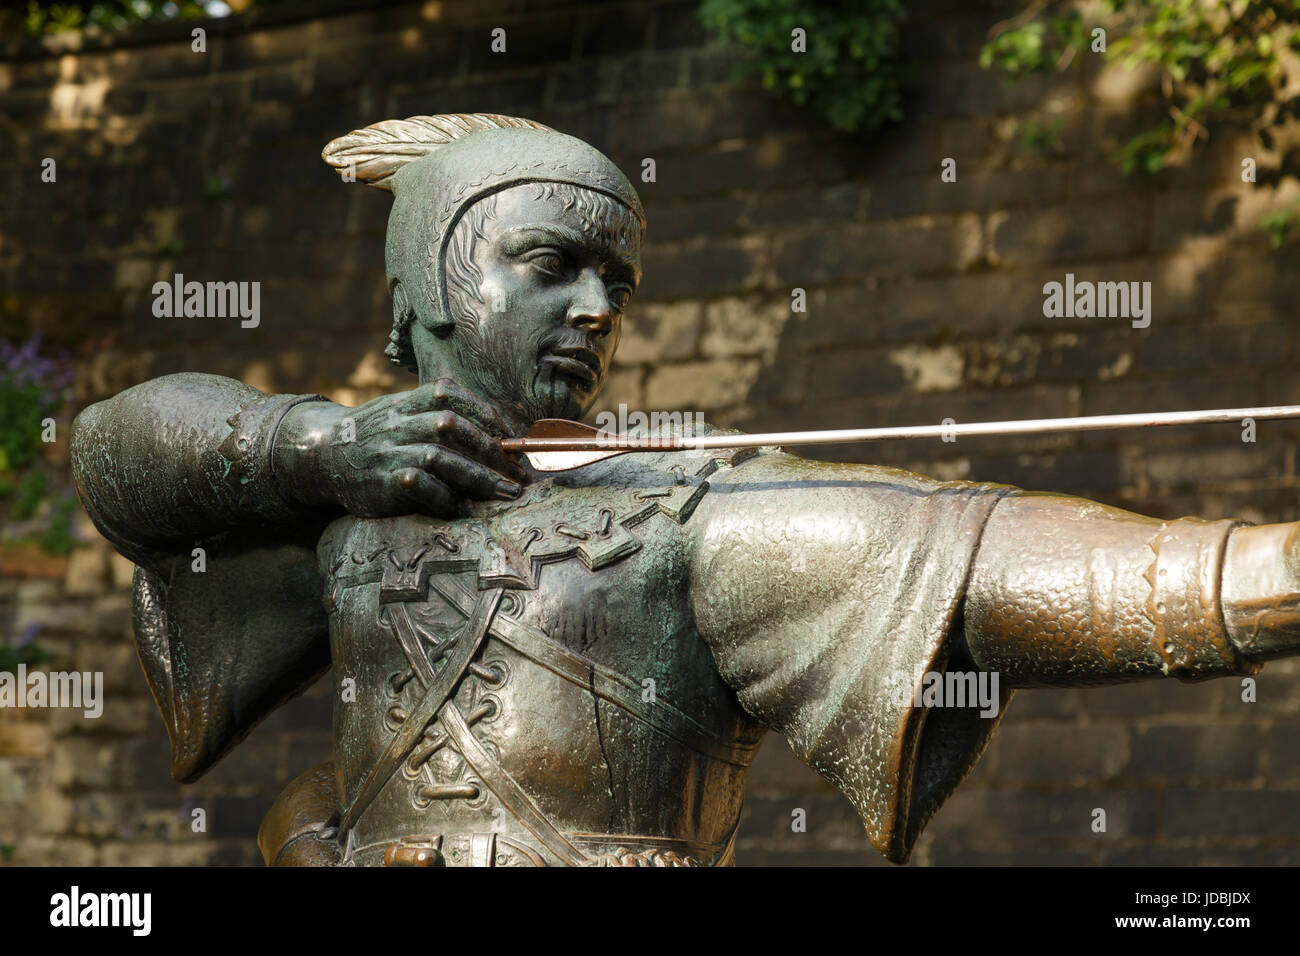 Nottingham, England - Juni 17: Statue von Robin Hood, in der Nähe von Nottingham Castle. in Nottingham, England. Am 17. Juni 2017. Stockfoto